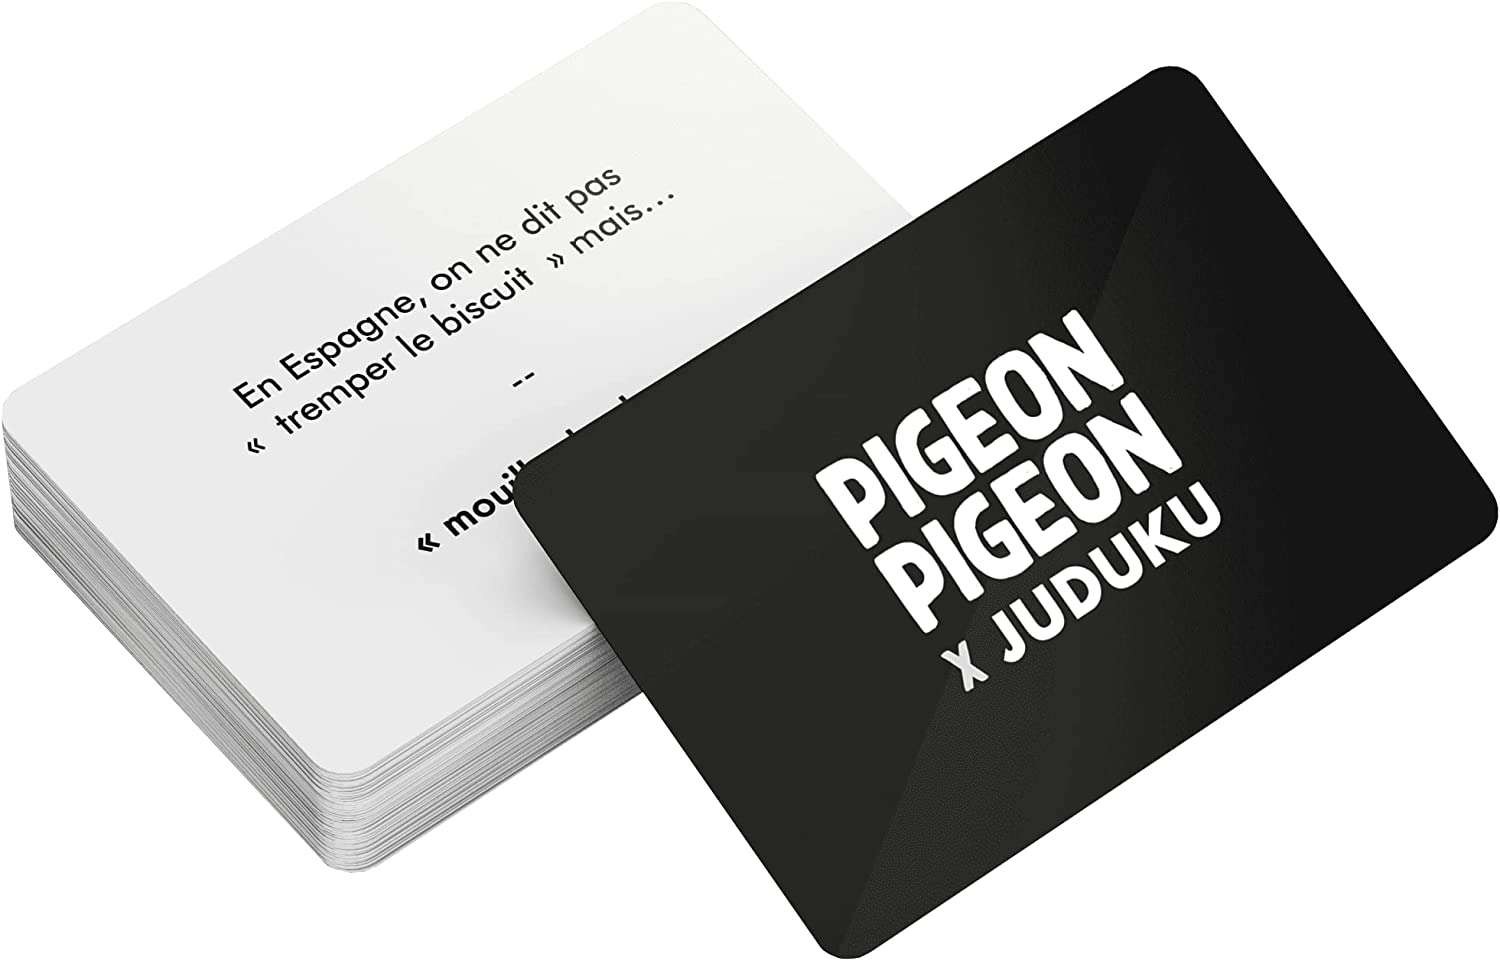 Exemple de question pigeon pigeon extrême Juduku